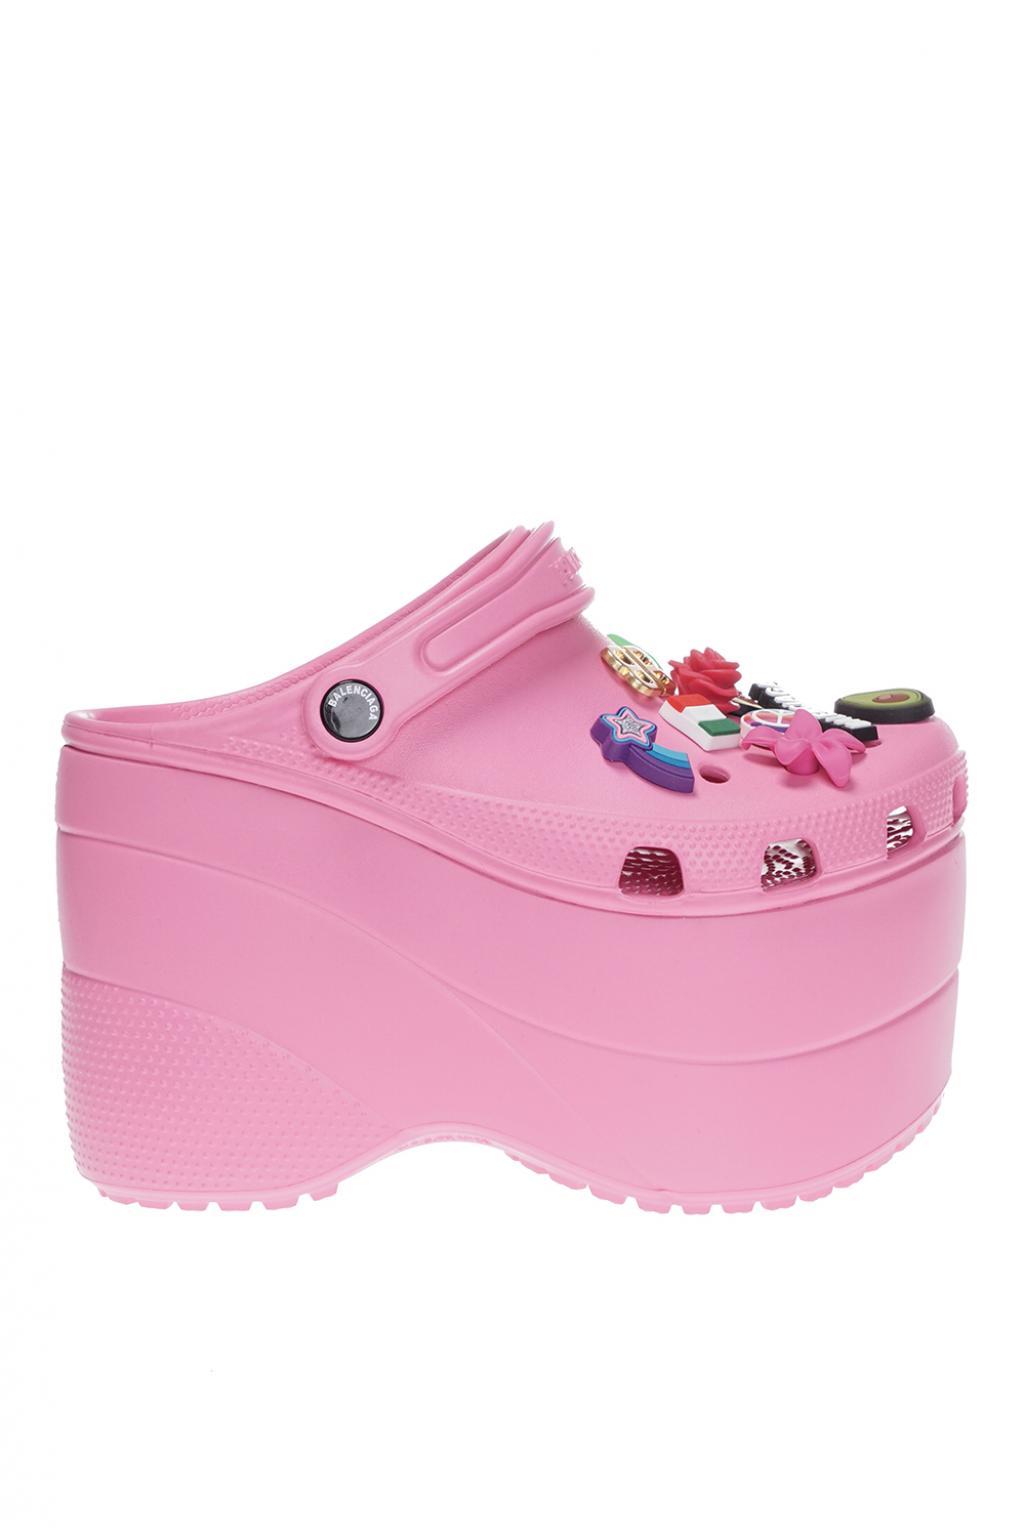 Balenciaga Rubber X Crocs in Pink - Lyst